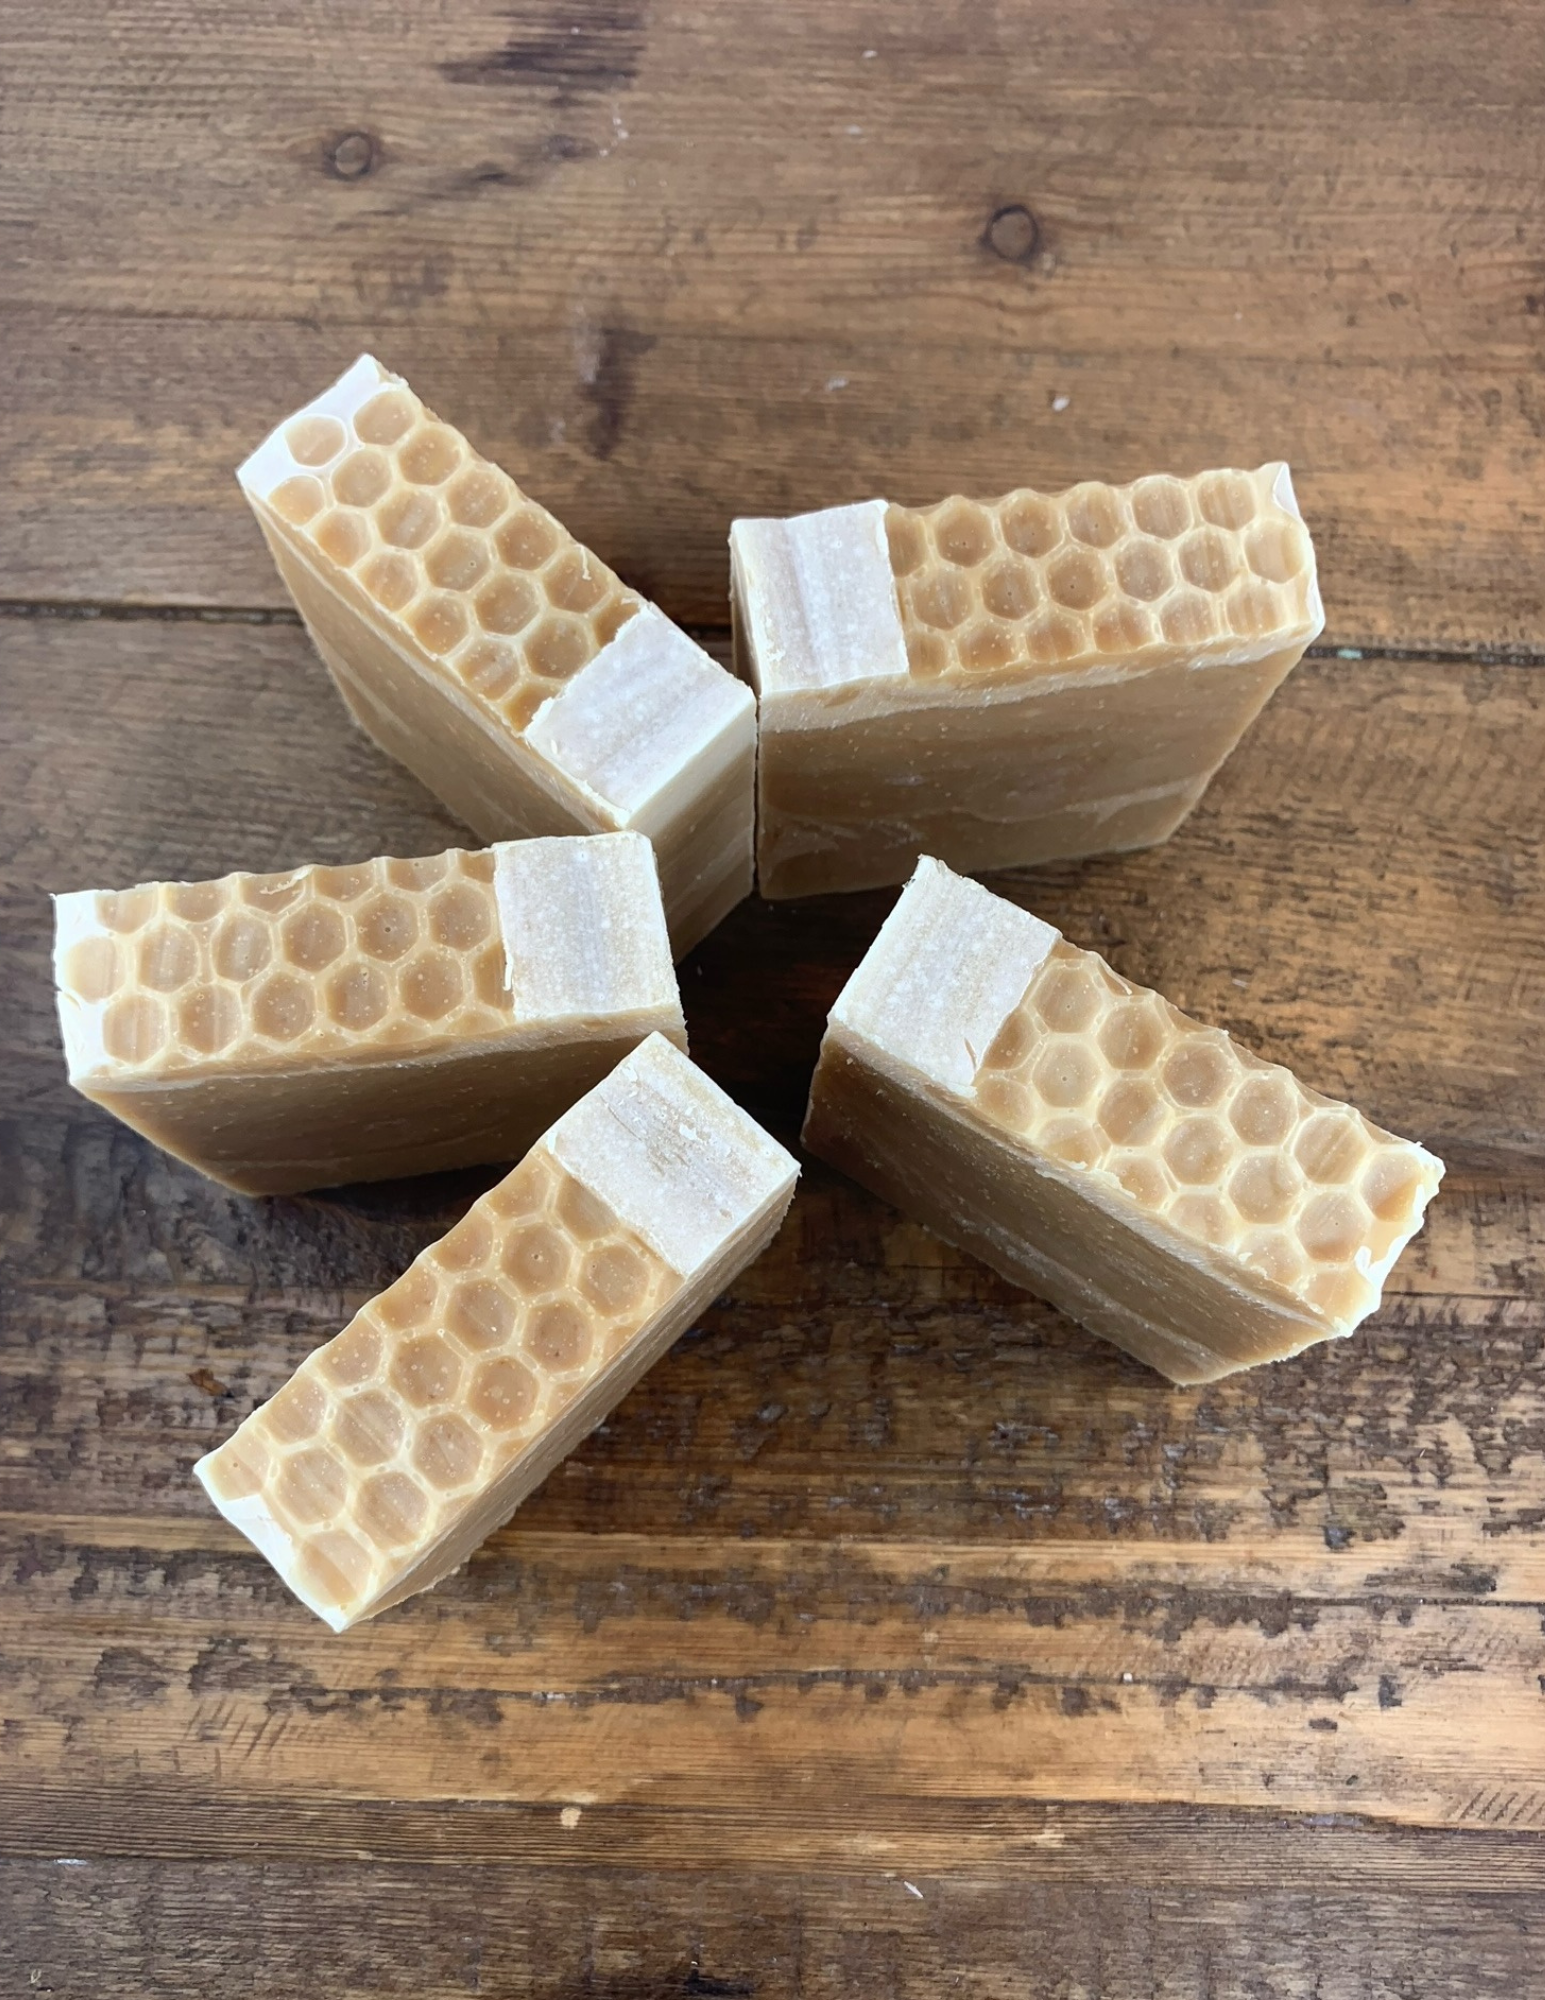 Triple Beurre Miel - Triple Butter Honey Soap